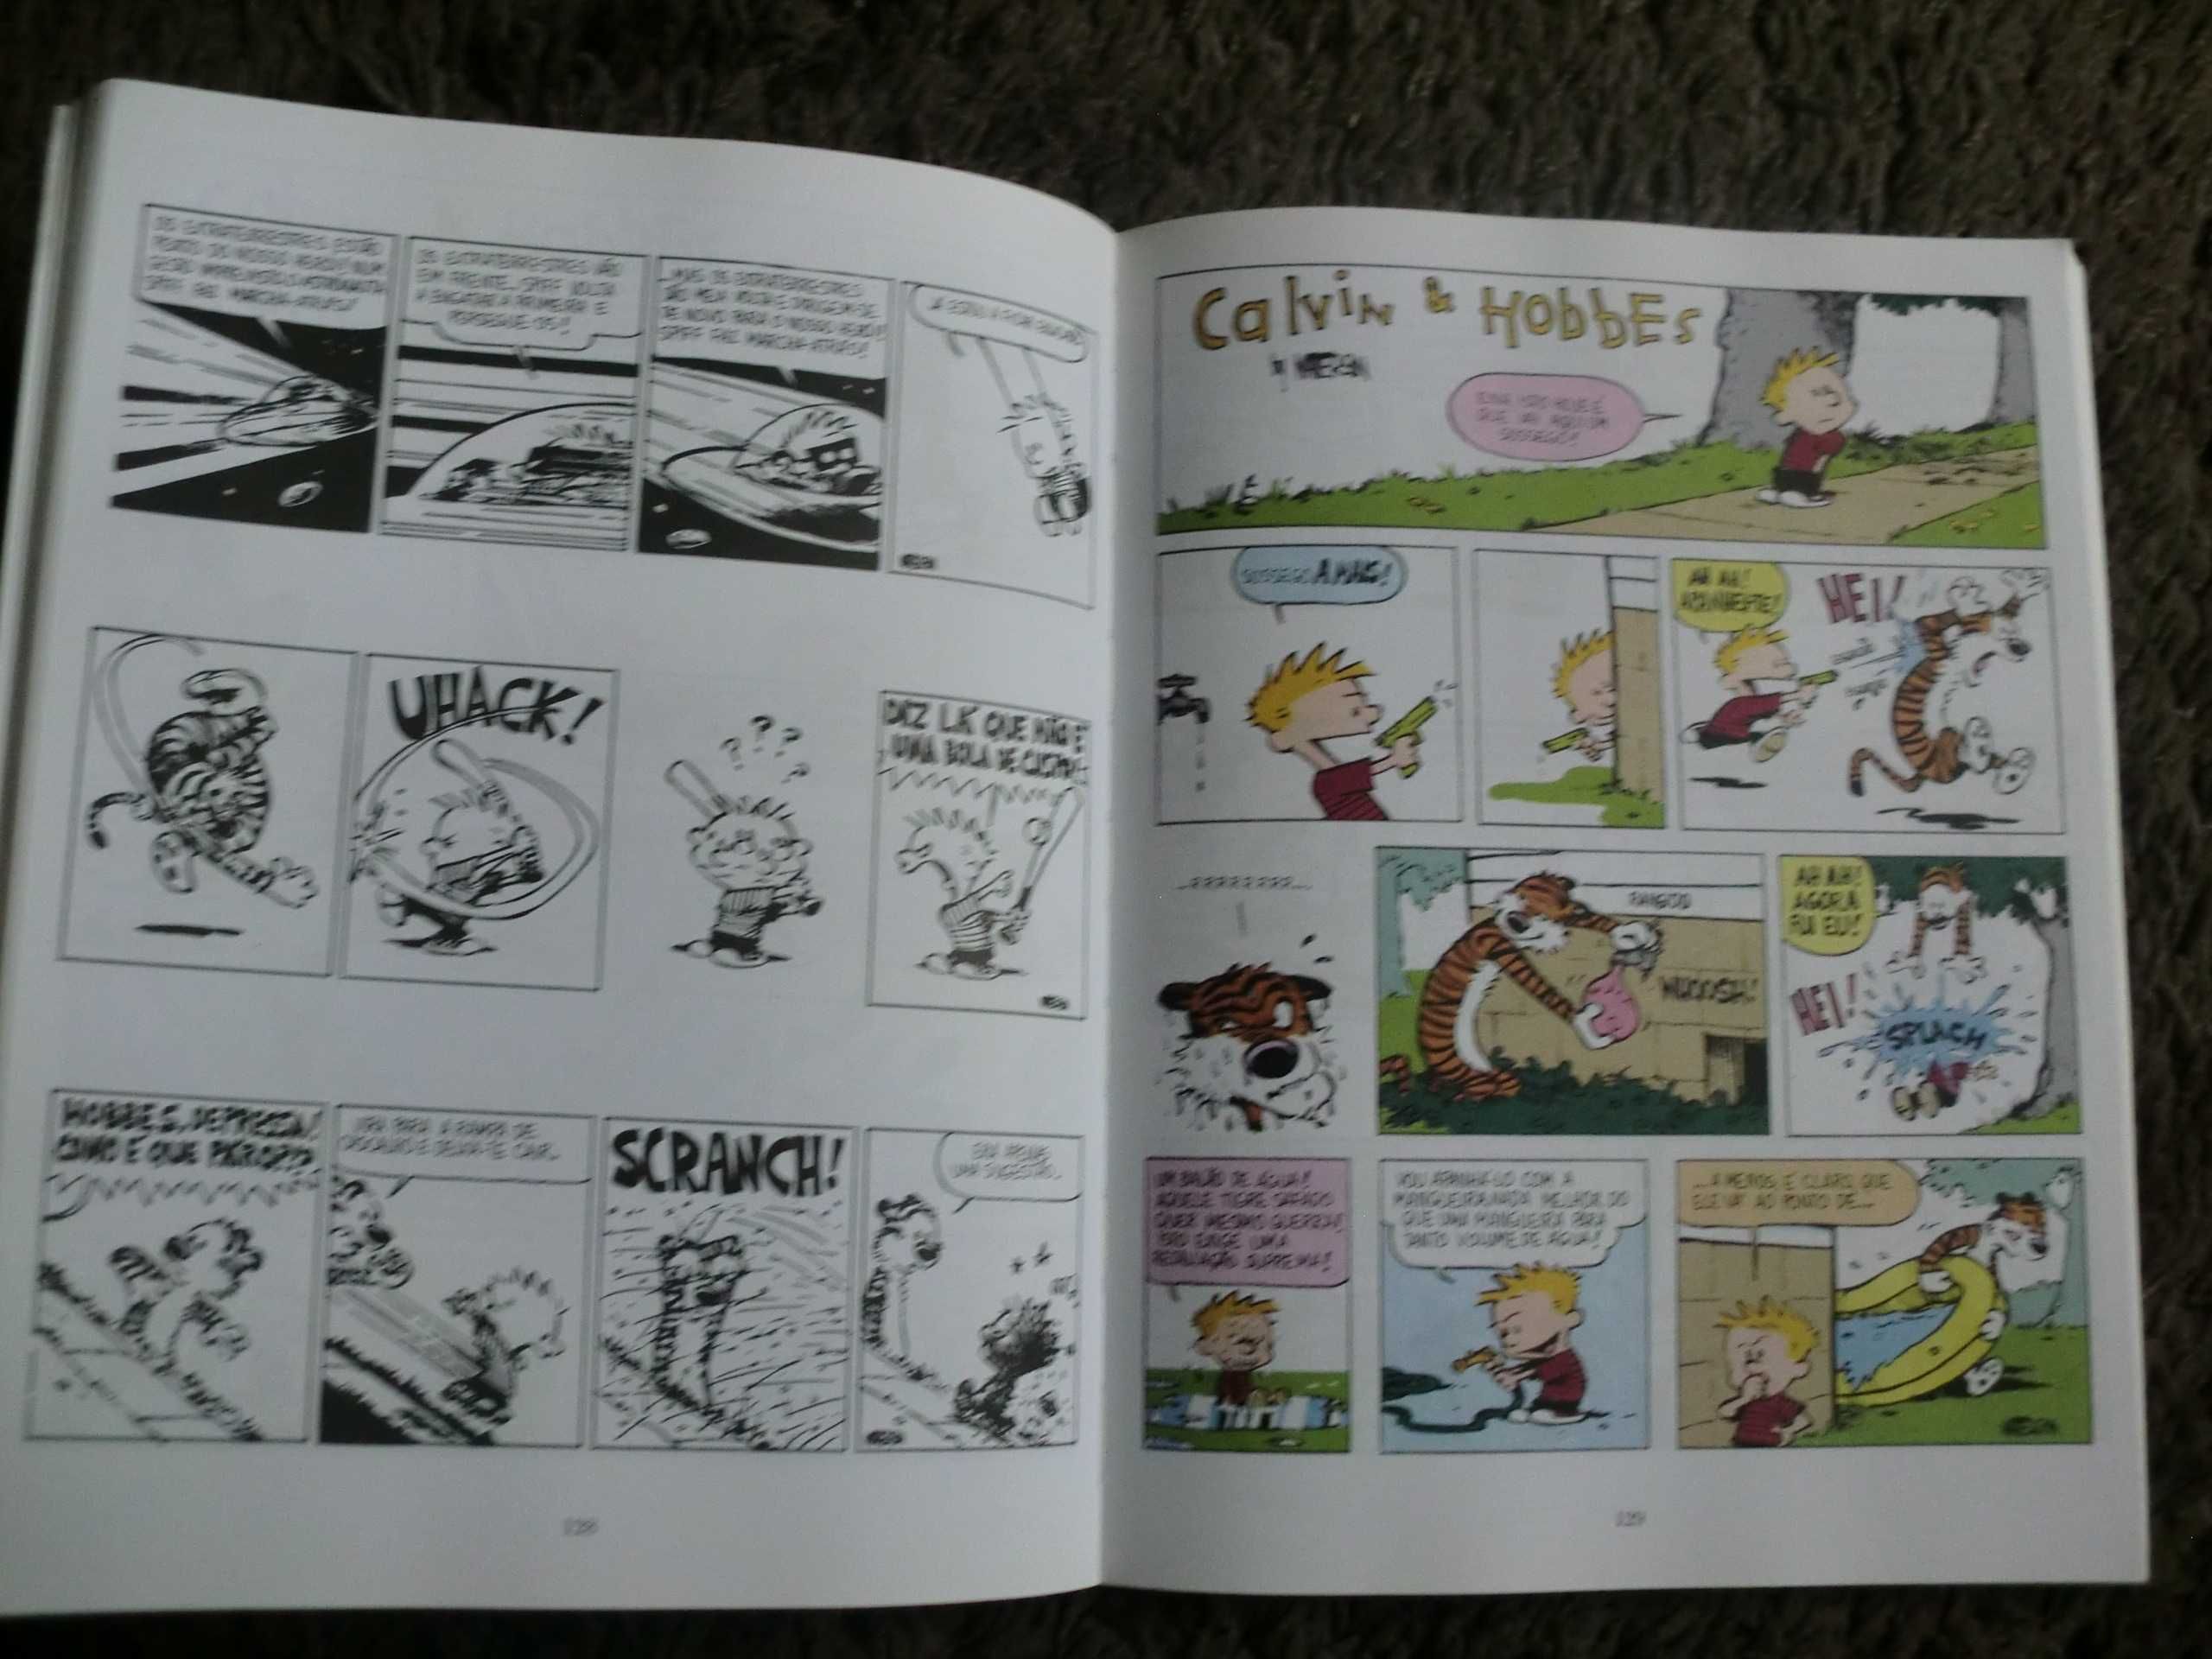 O Essencial de Calvin & Hobbes
de Bill Watterson